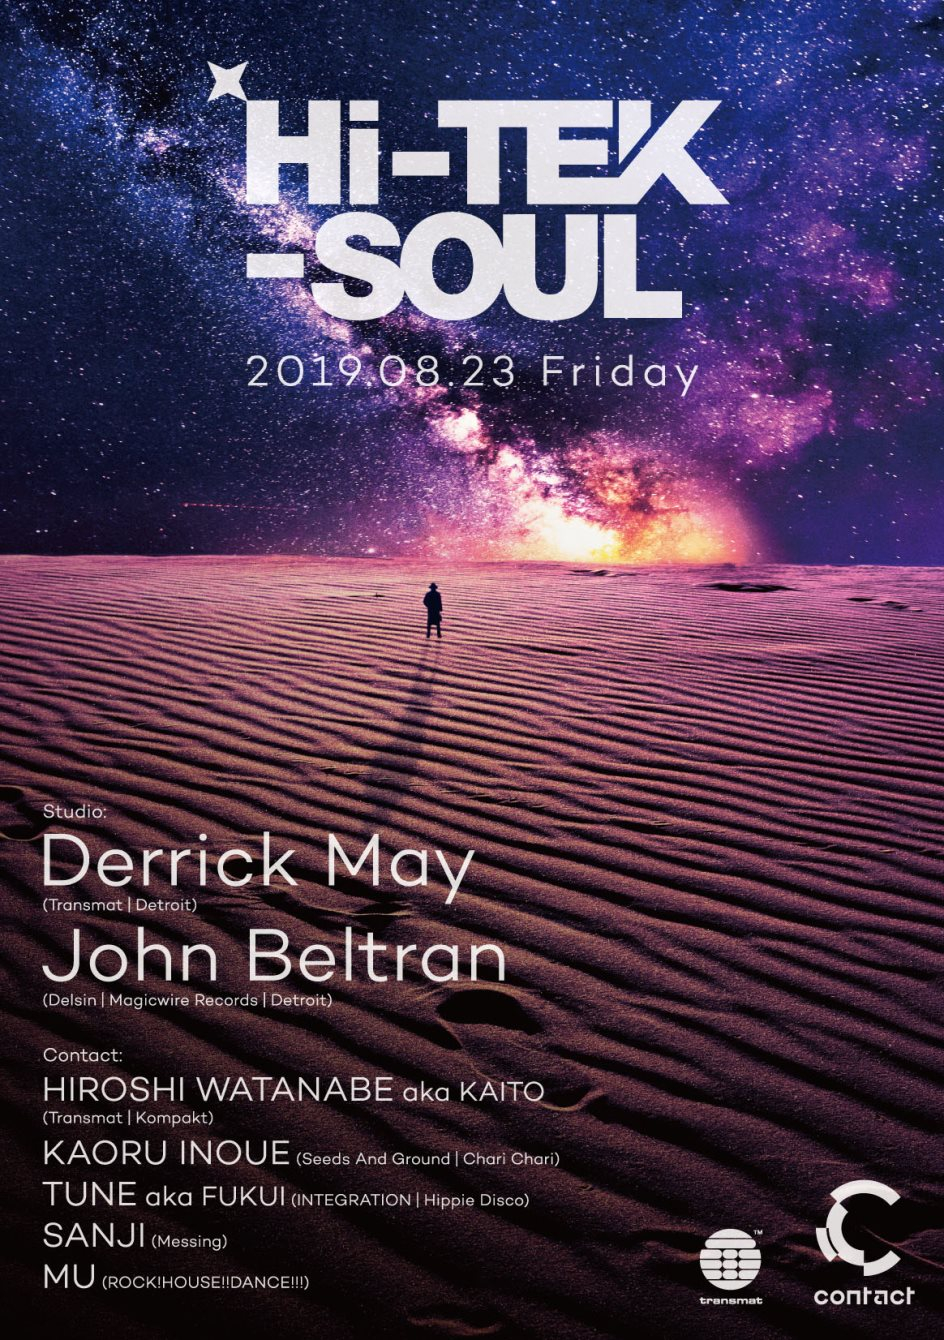 Hi-TEK-Soul Feat. Derrick May, John Beltran - Flyer front